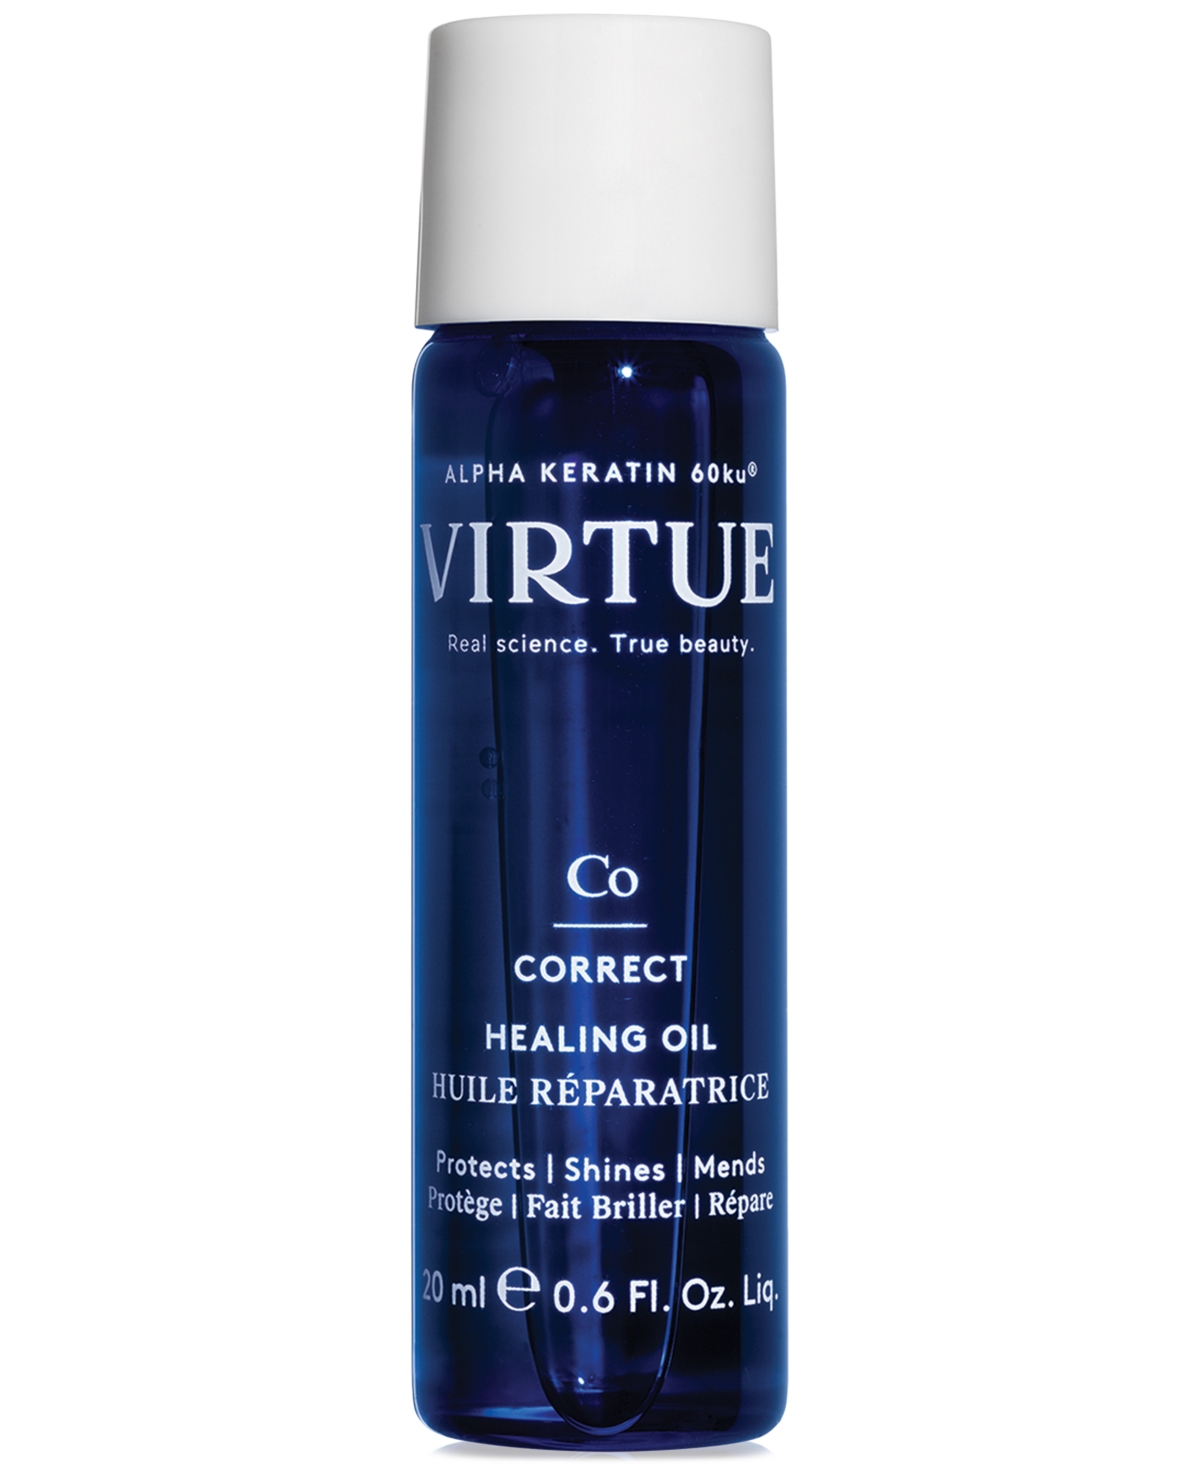 Virtue Healing Oil, 0.6 Oz.